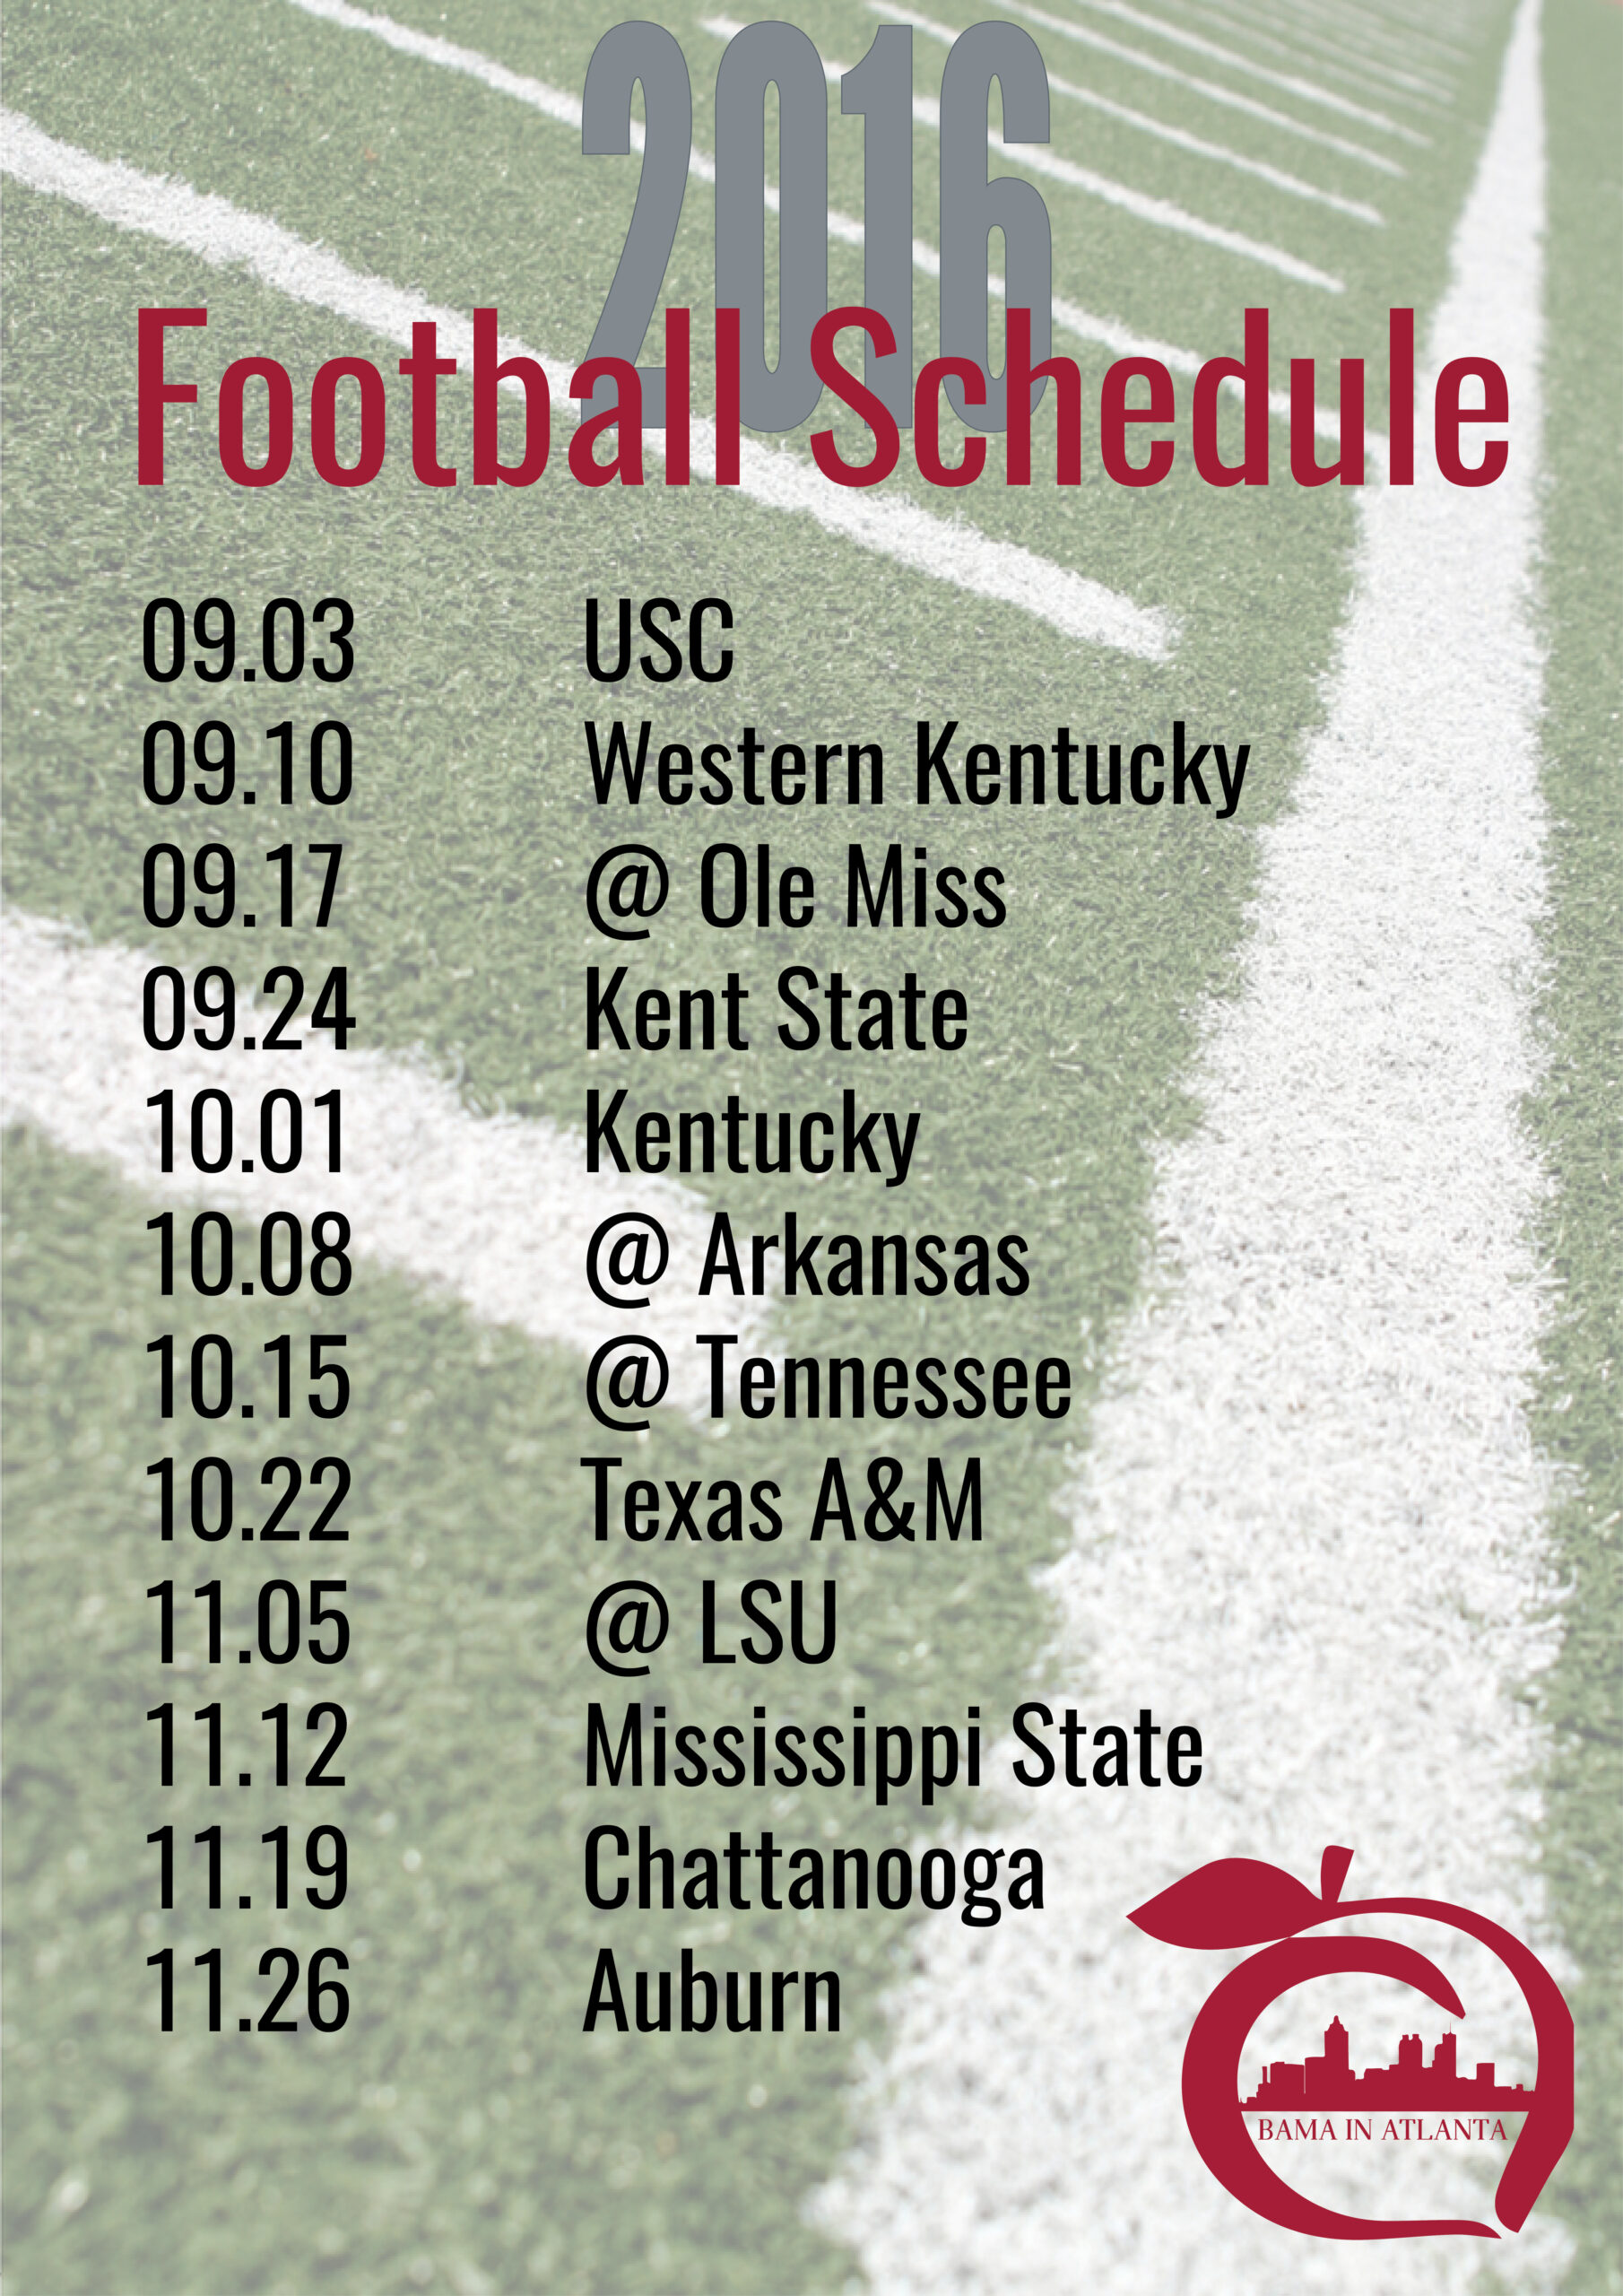 Alabama Football Schedule Bama in Atlanta